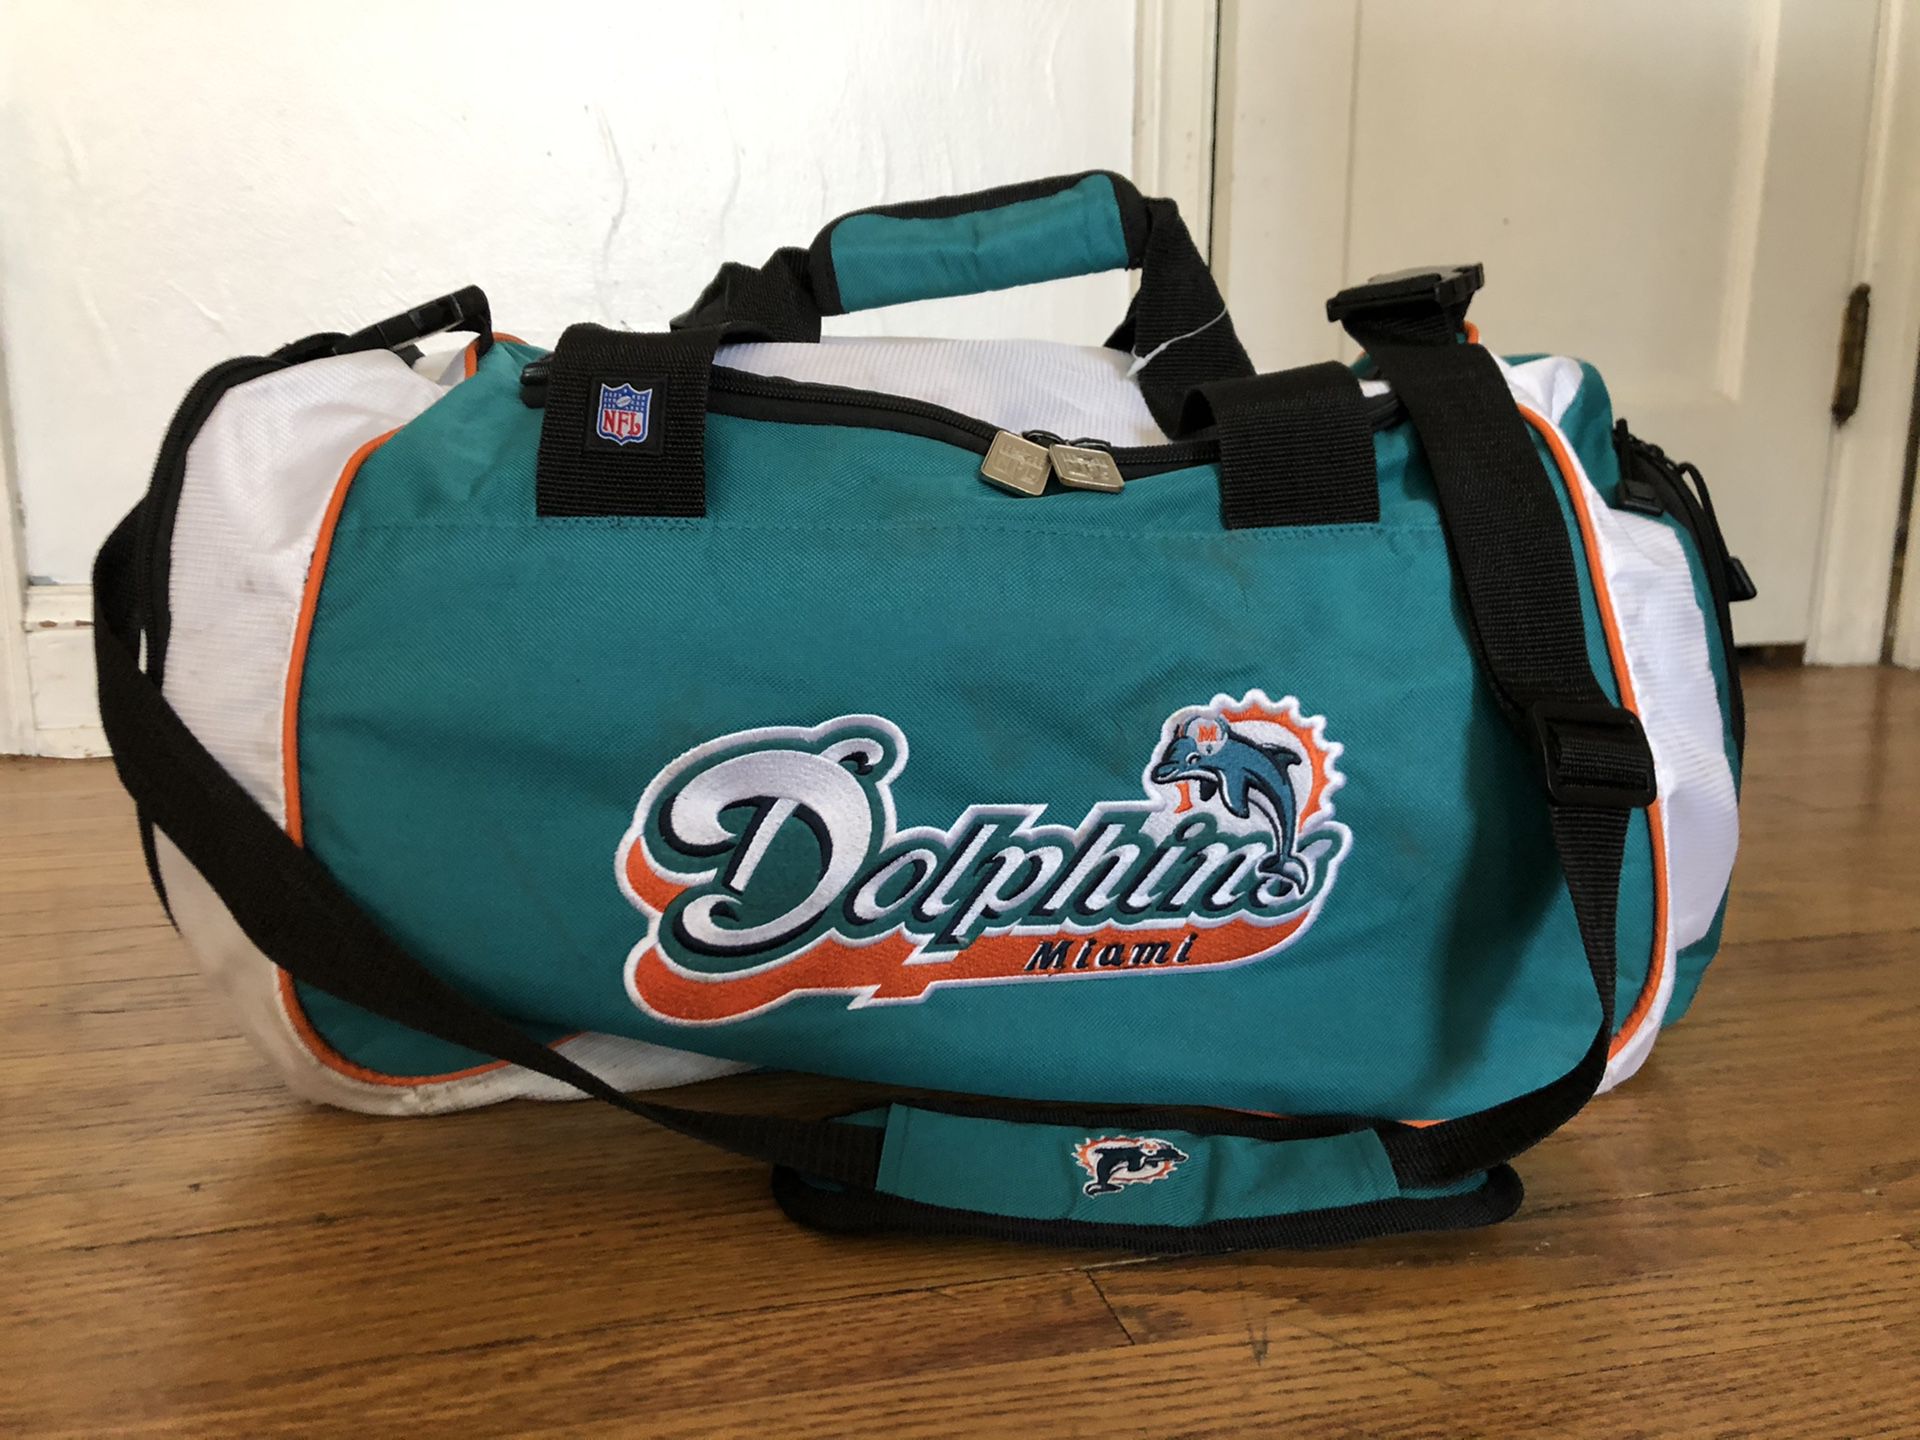 NFL Miami Dolphins duffle/ gym bag